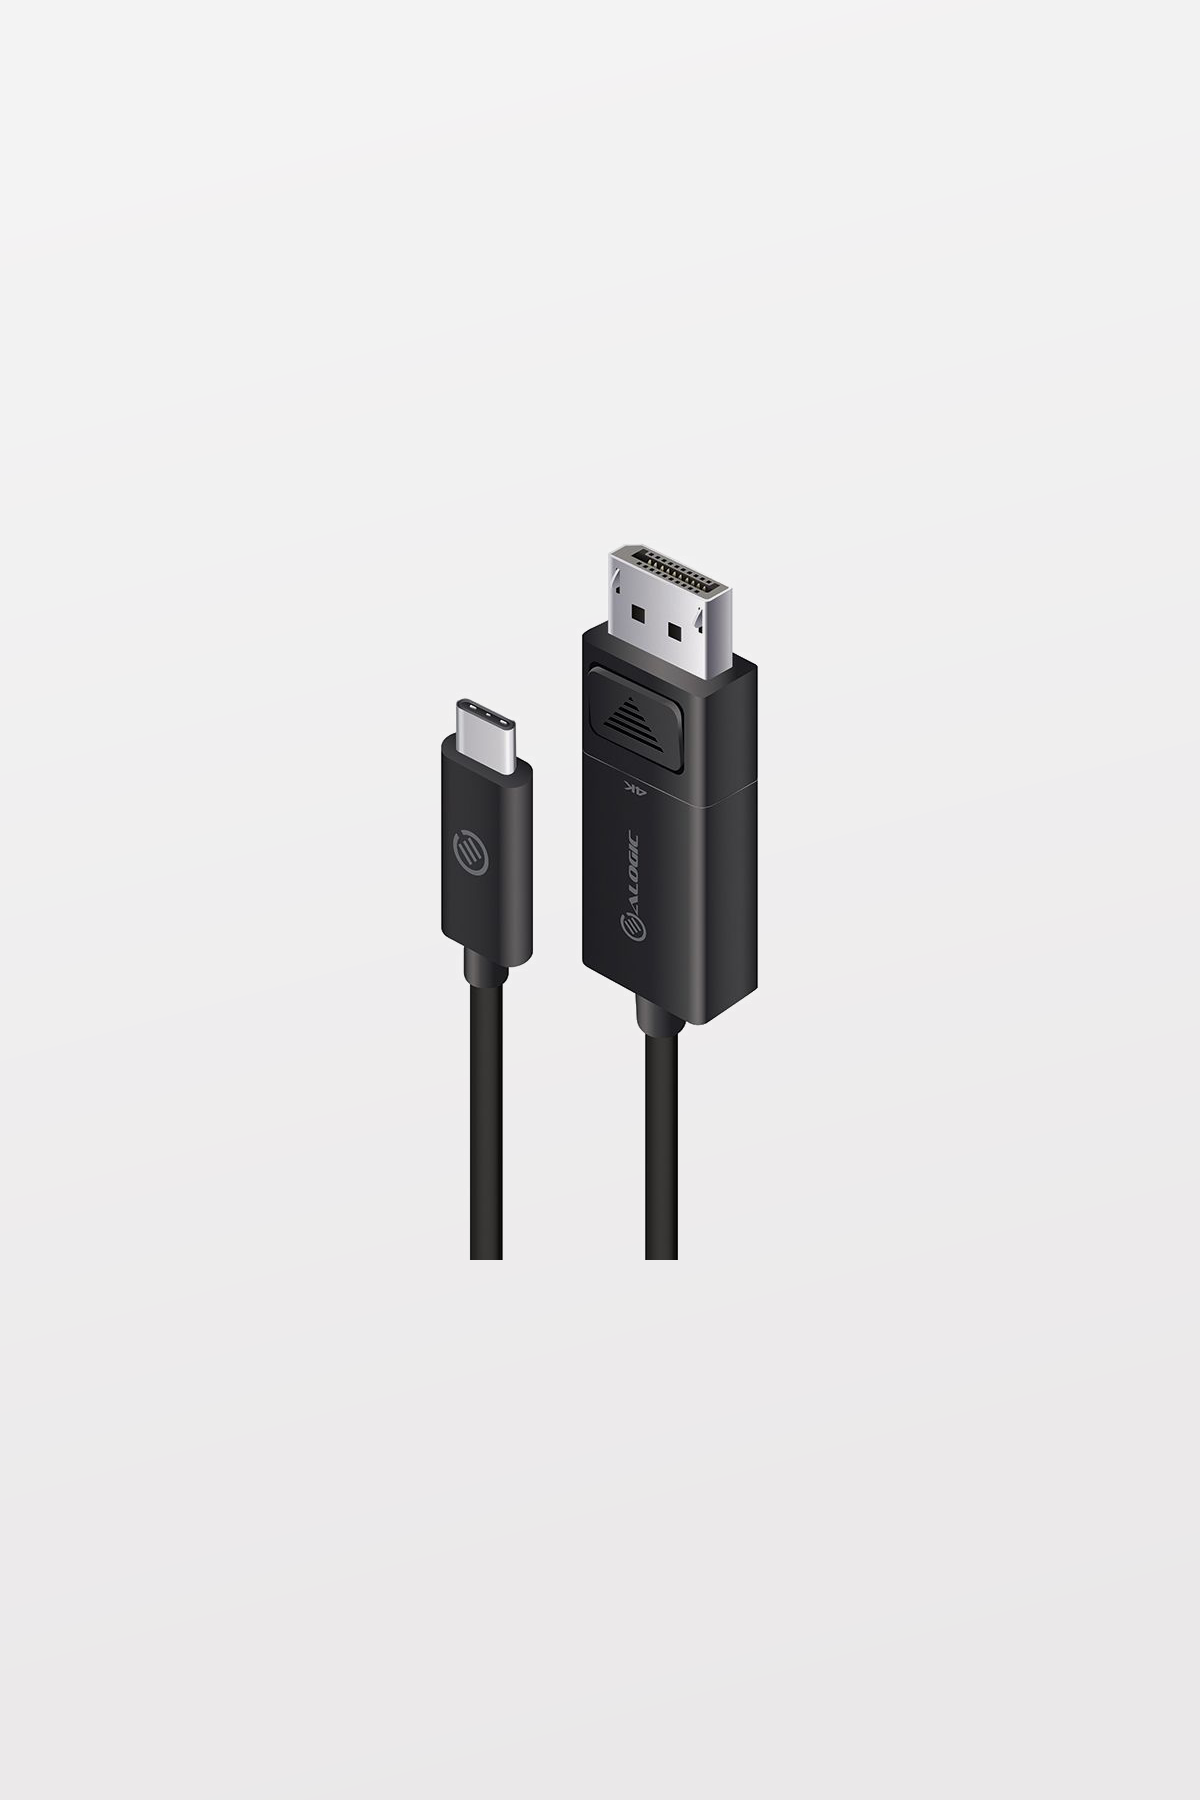 ALOGIC USB-C to DisplayPort Cable - 4K - 2m